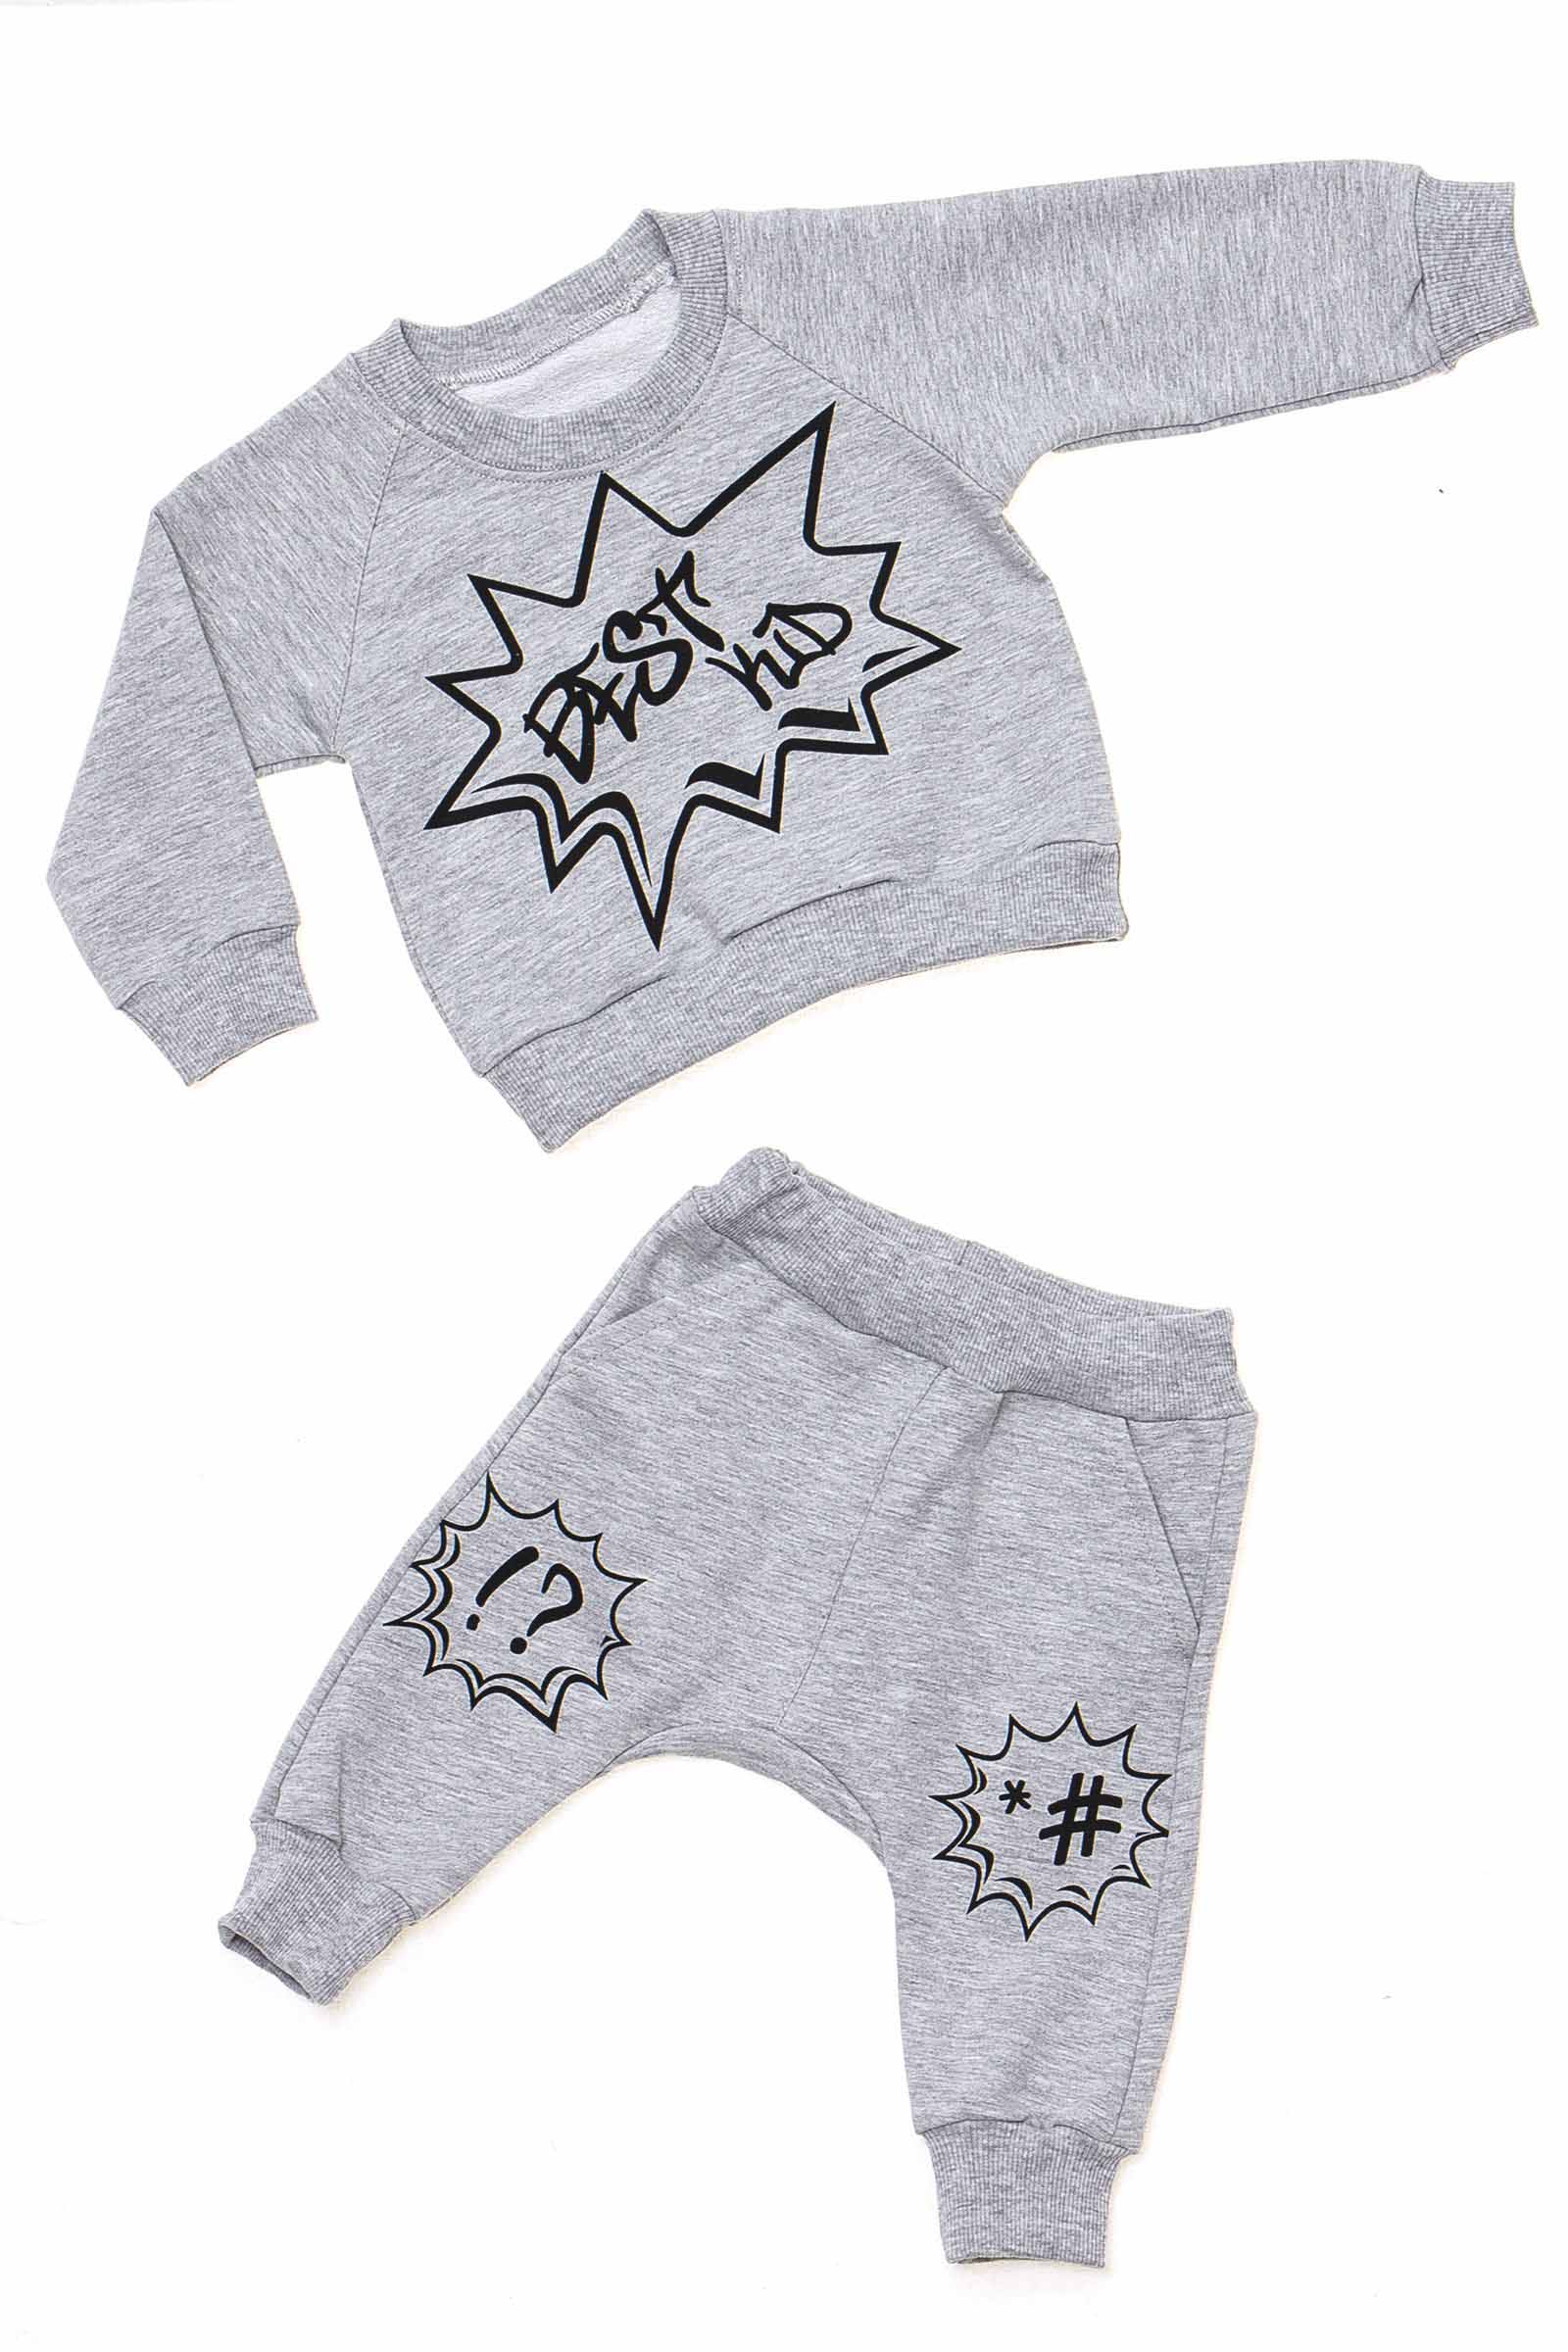 Комплект для мальчика АЛЕНА 2905 кофта брюки футер Текстиль Центр 